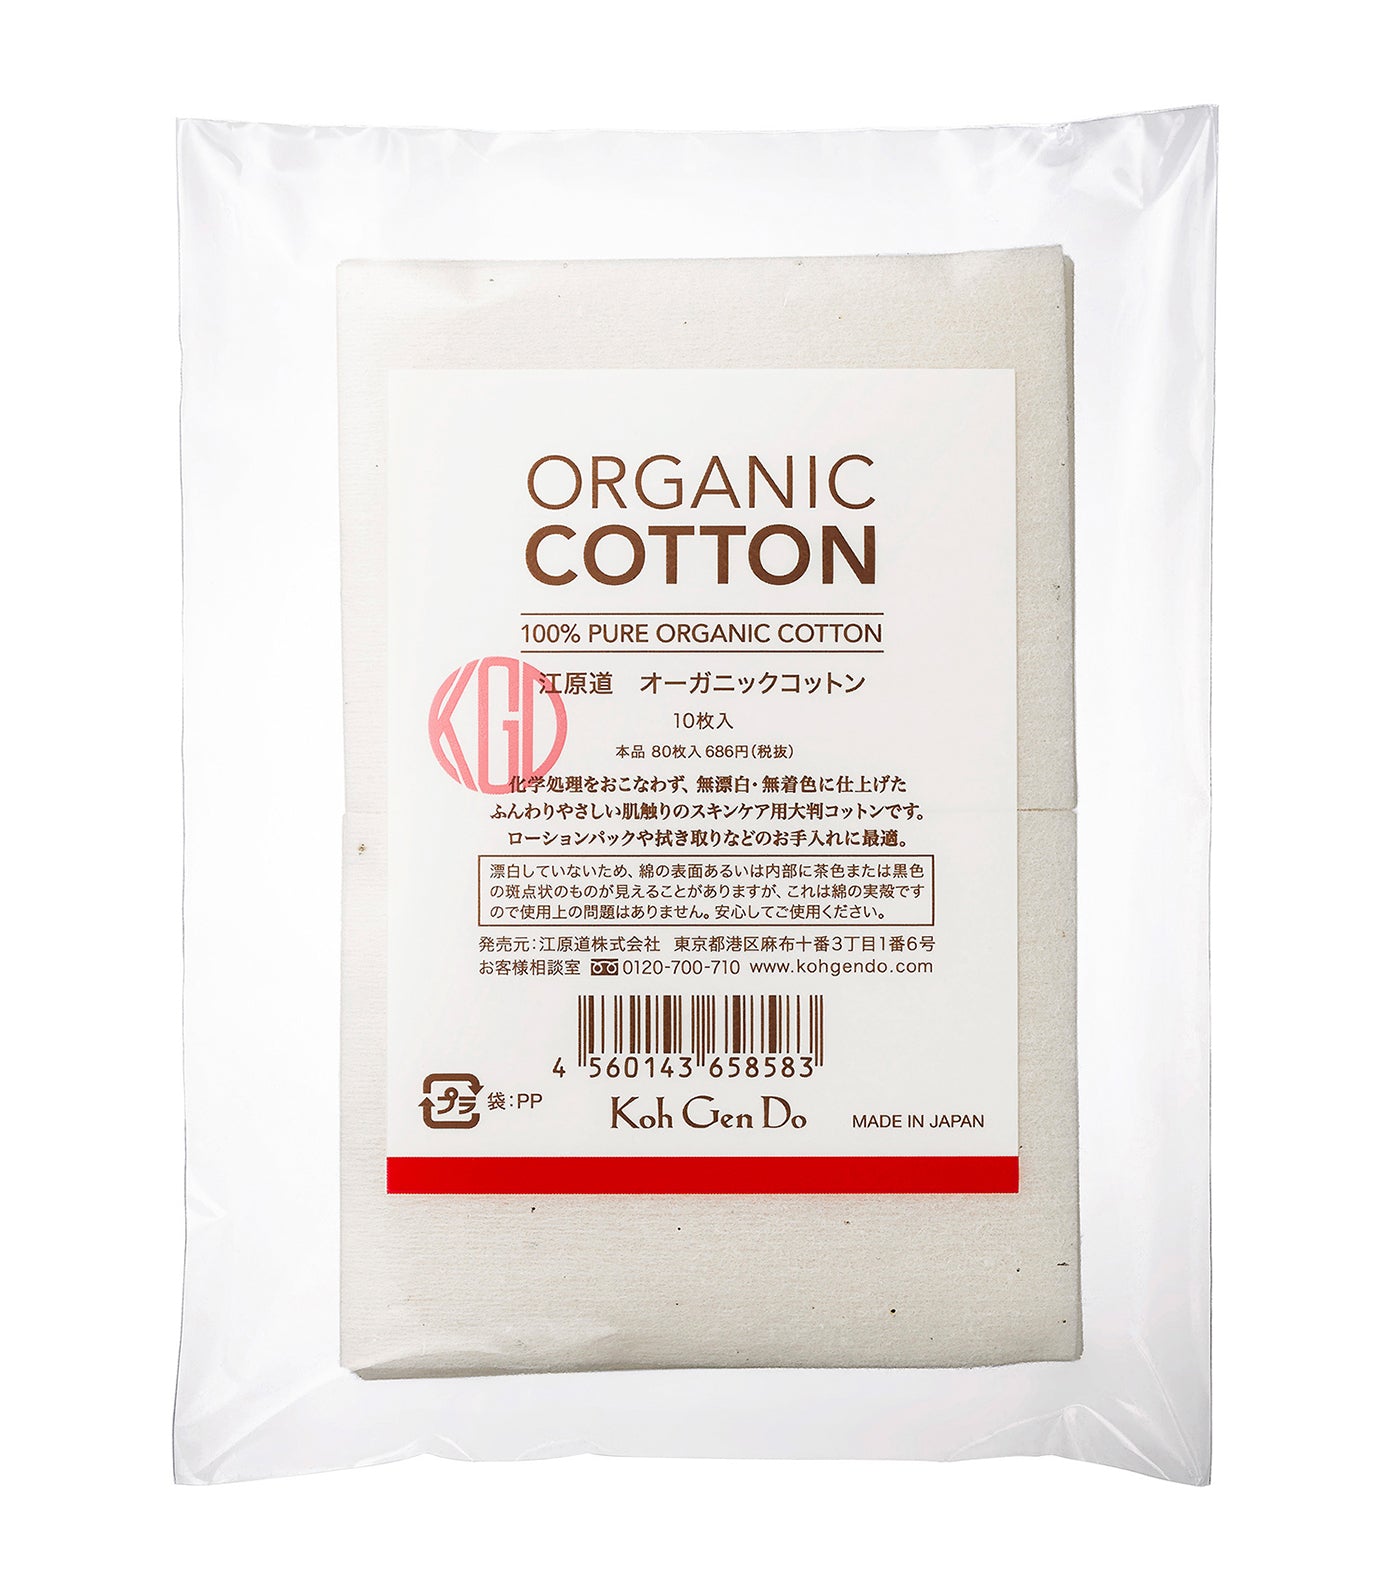 Free Organic Cotton Pads